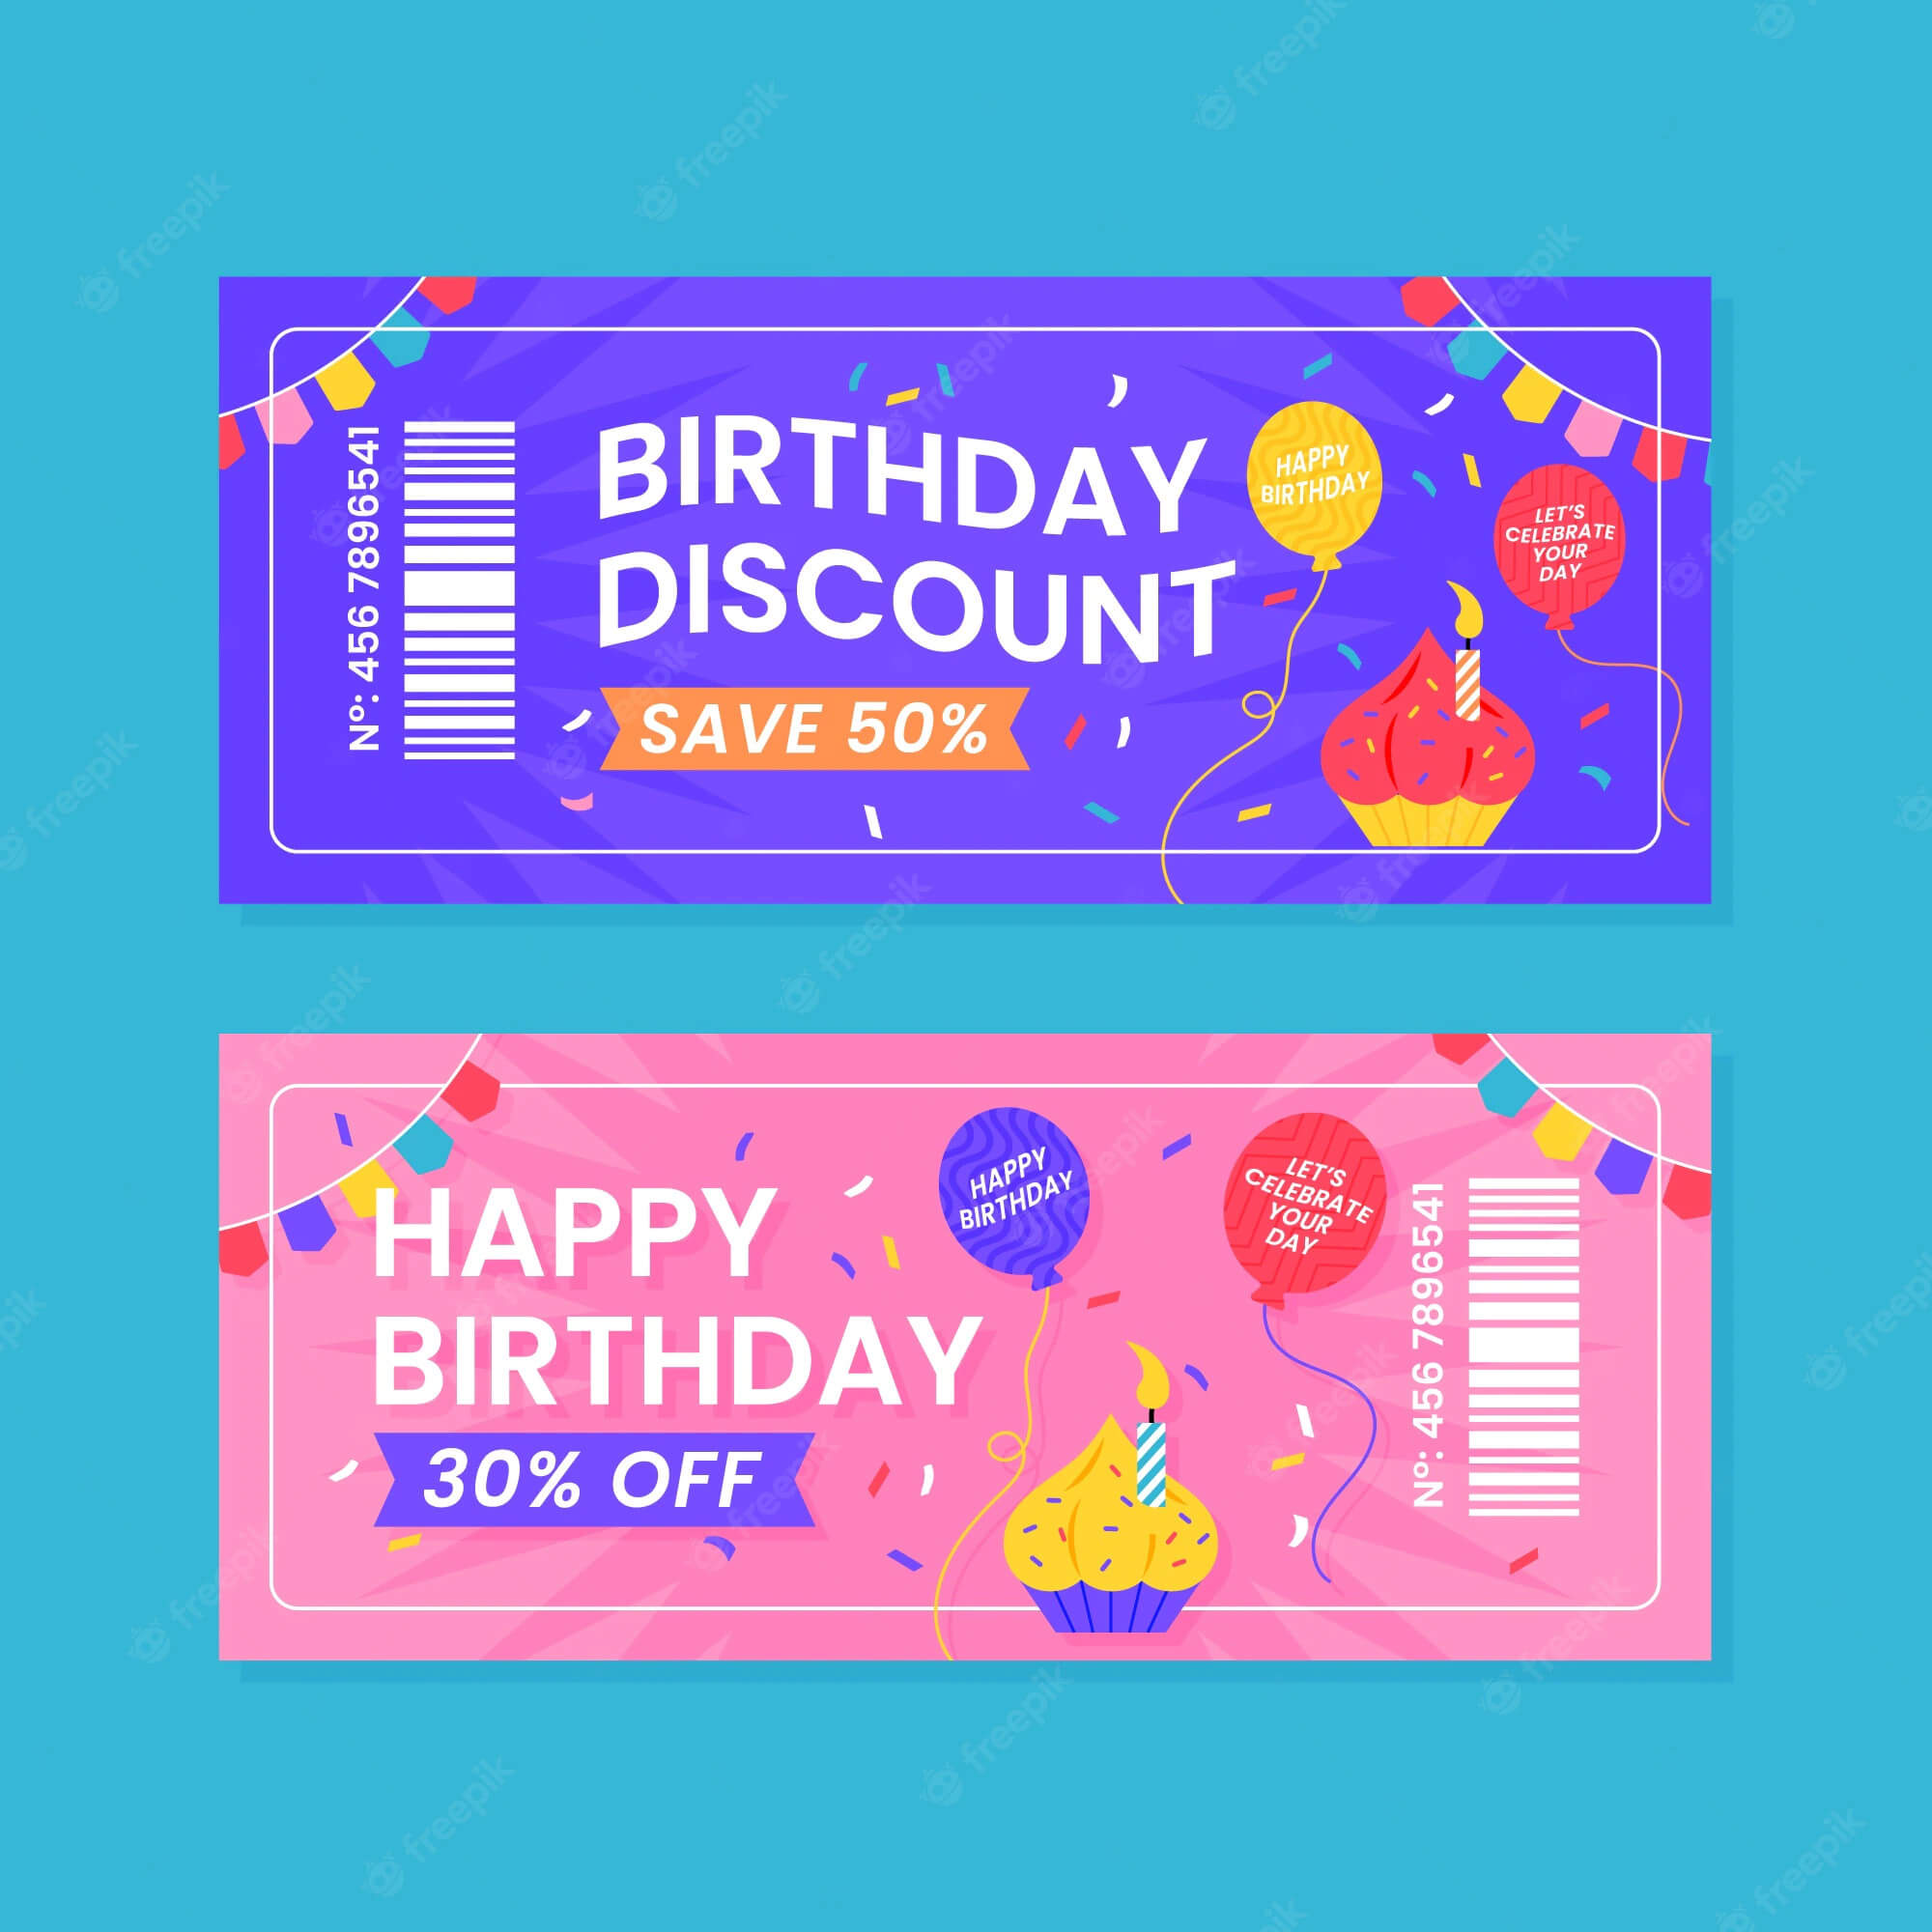 birthday discounts